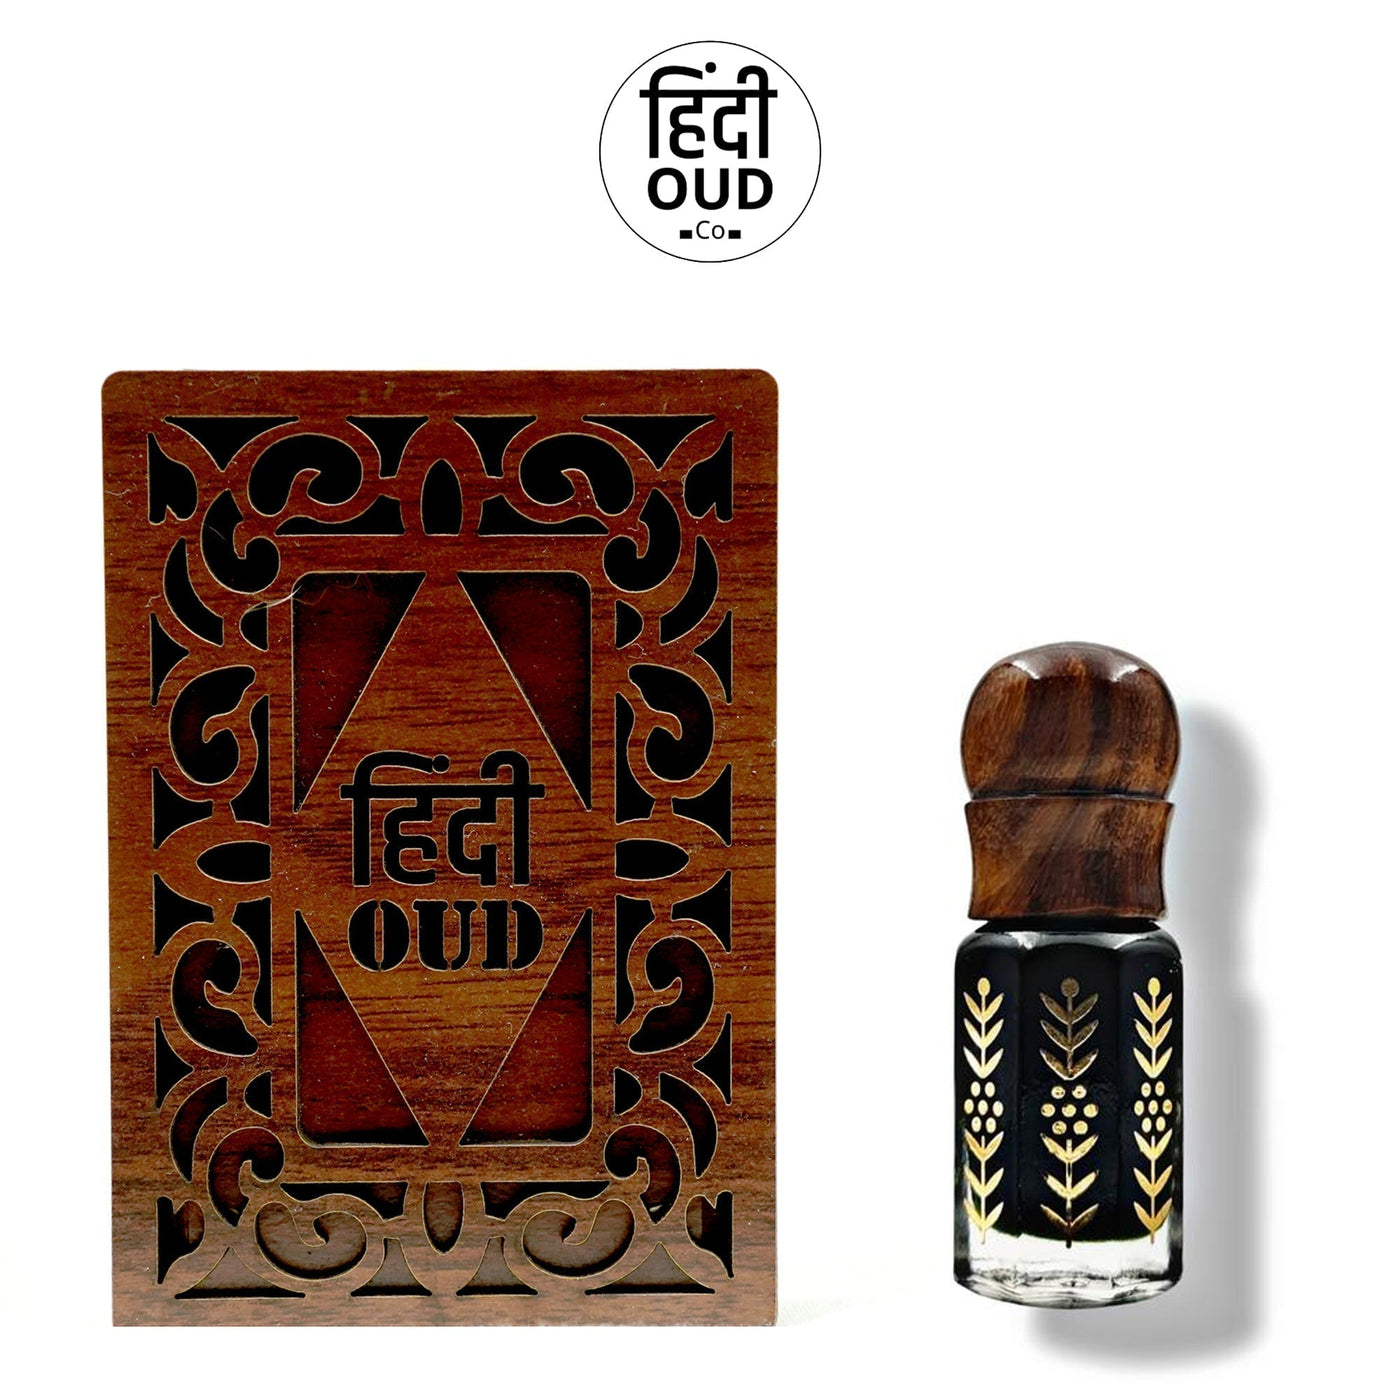 Hindi Oud Co Presents - Tripura Oud Top Grade Raw Oud Oil from Tripura India